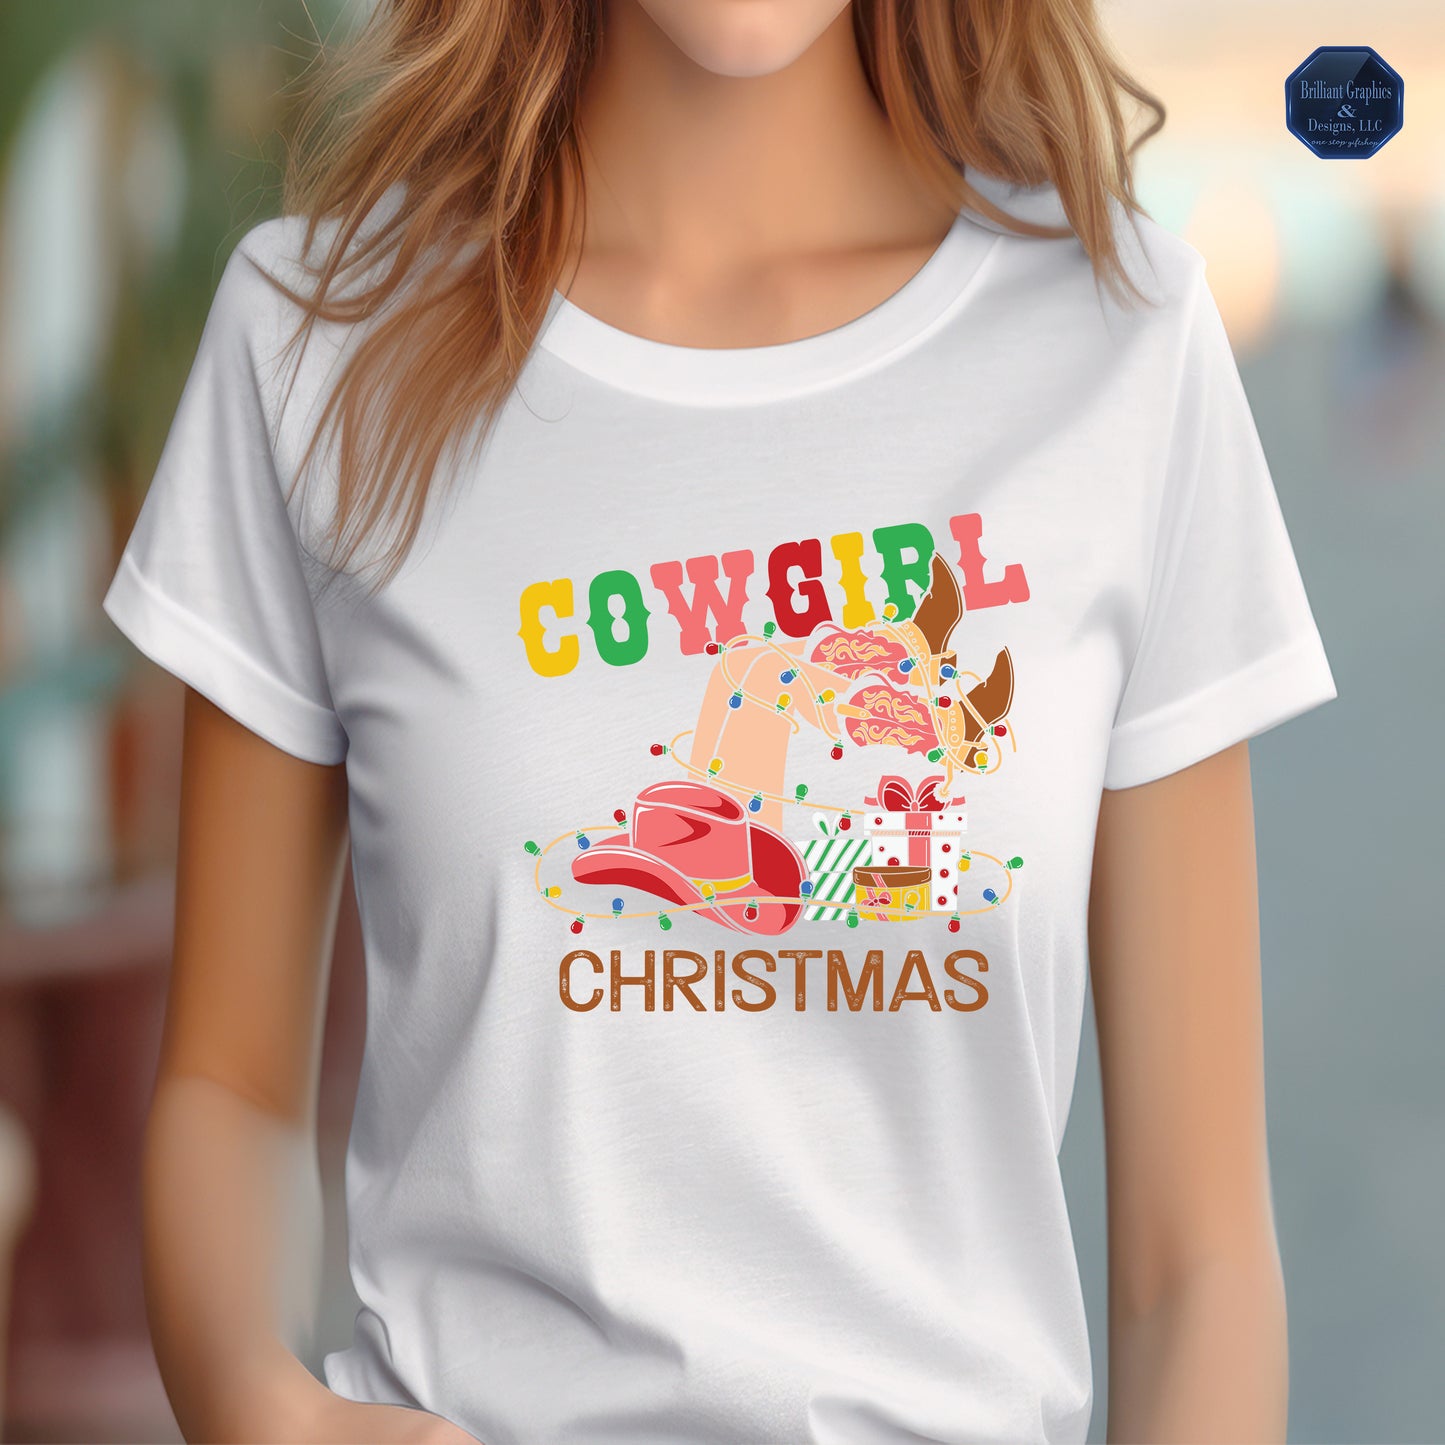 Cowgirl Christmas, Western Retro T-shirt